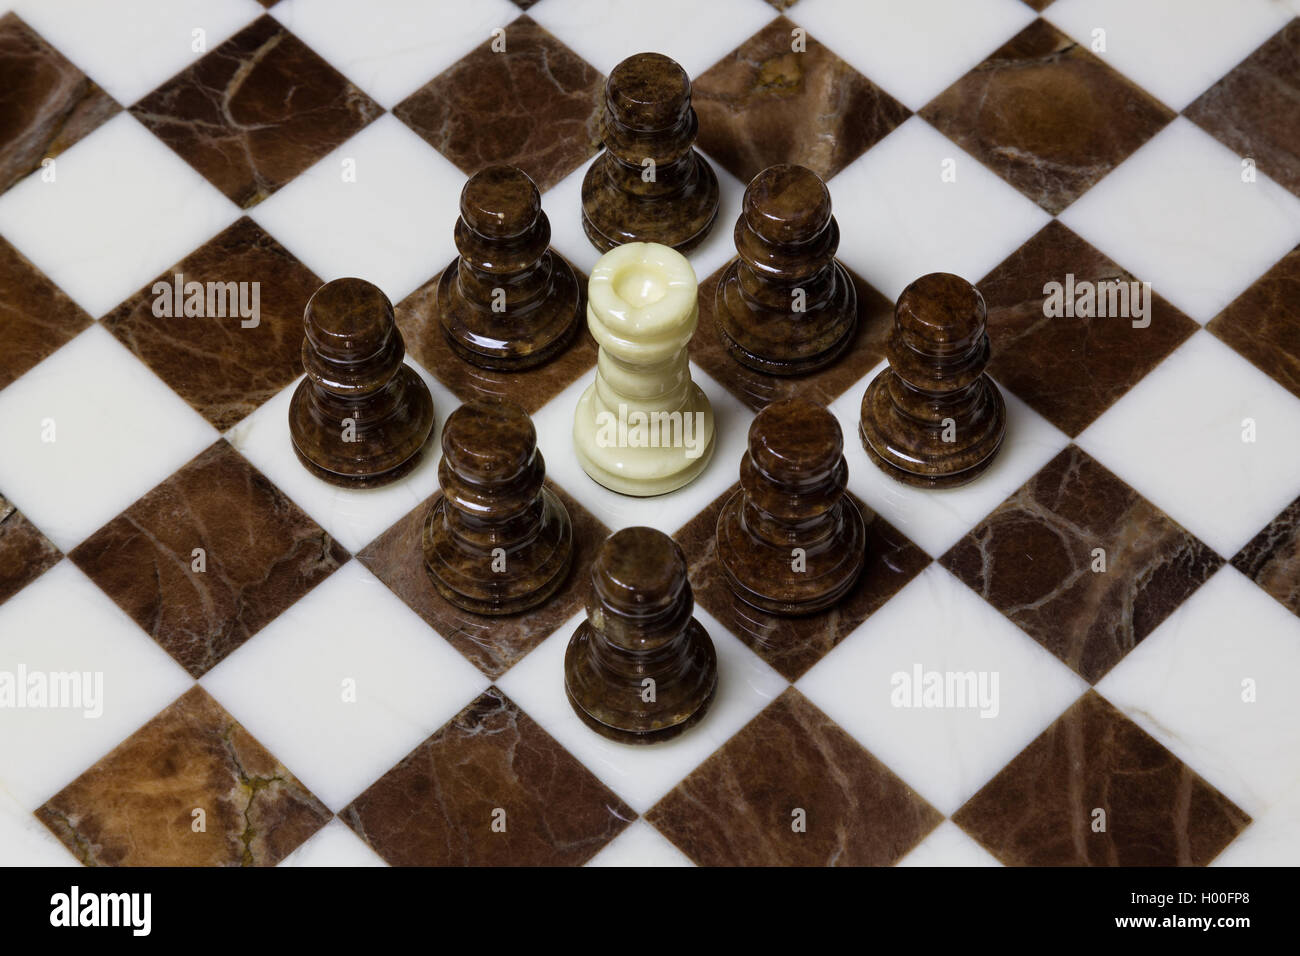 Chess - Alabaster Stock Photo